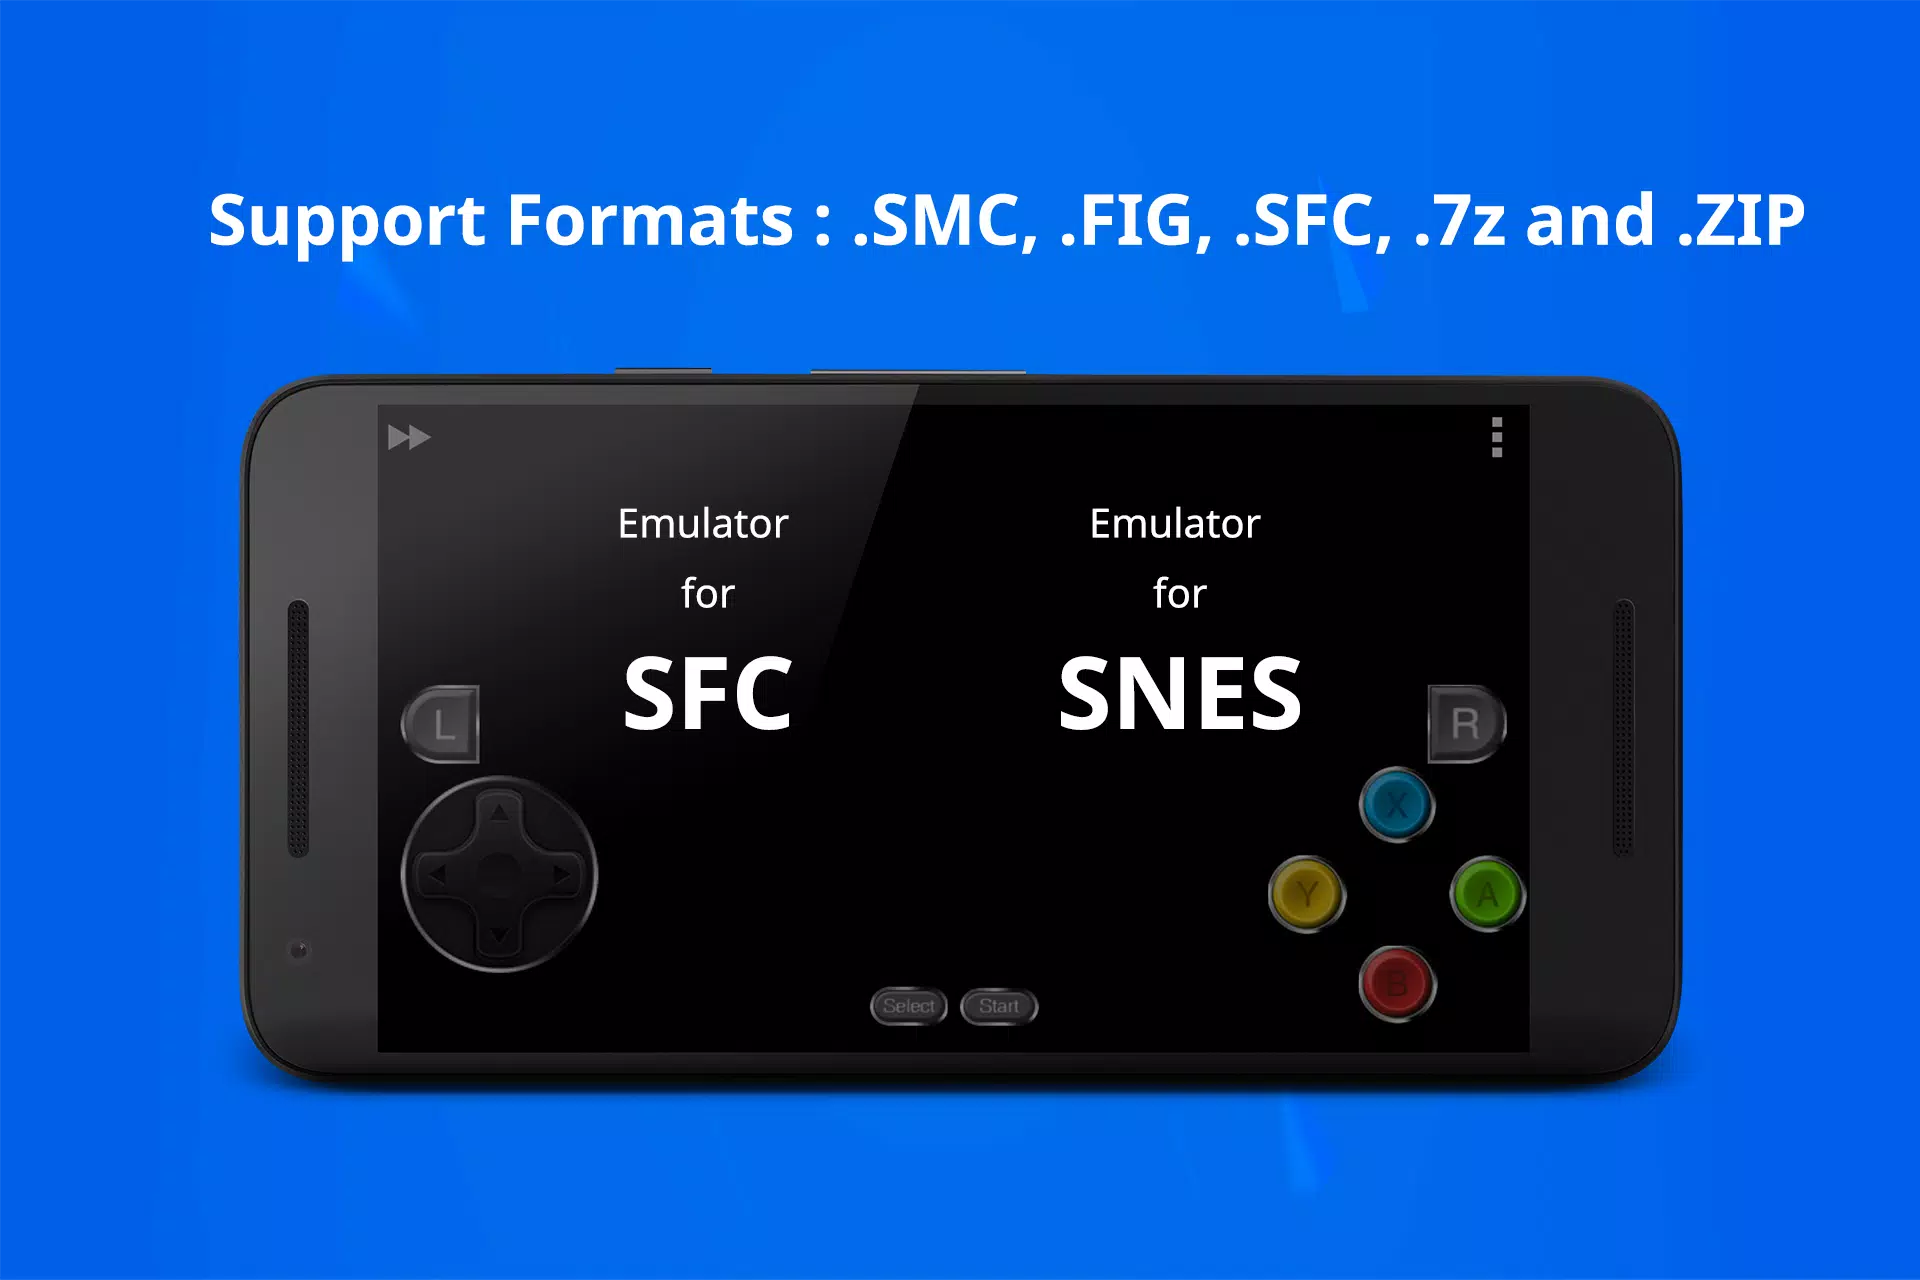 SNES Emulator - Super NES Emulador Guide APK for Android Download